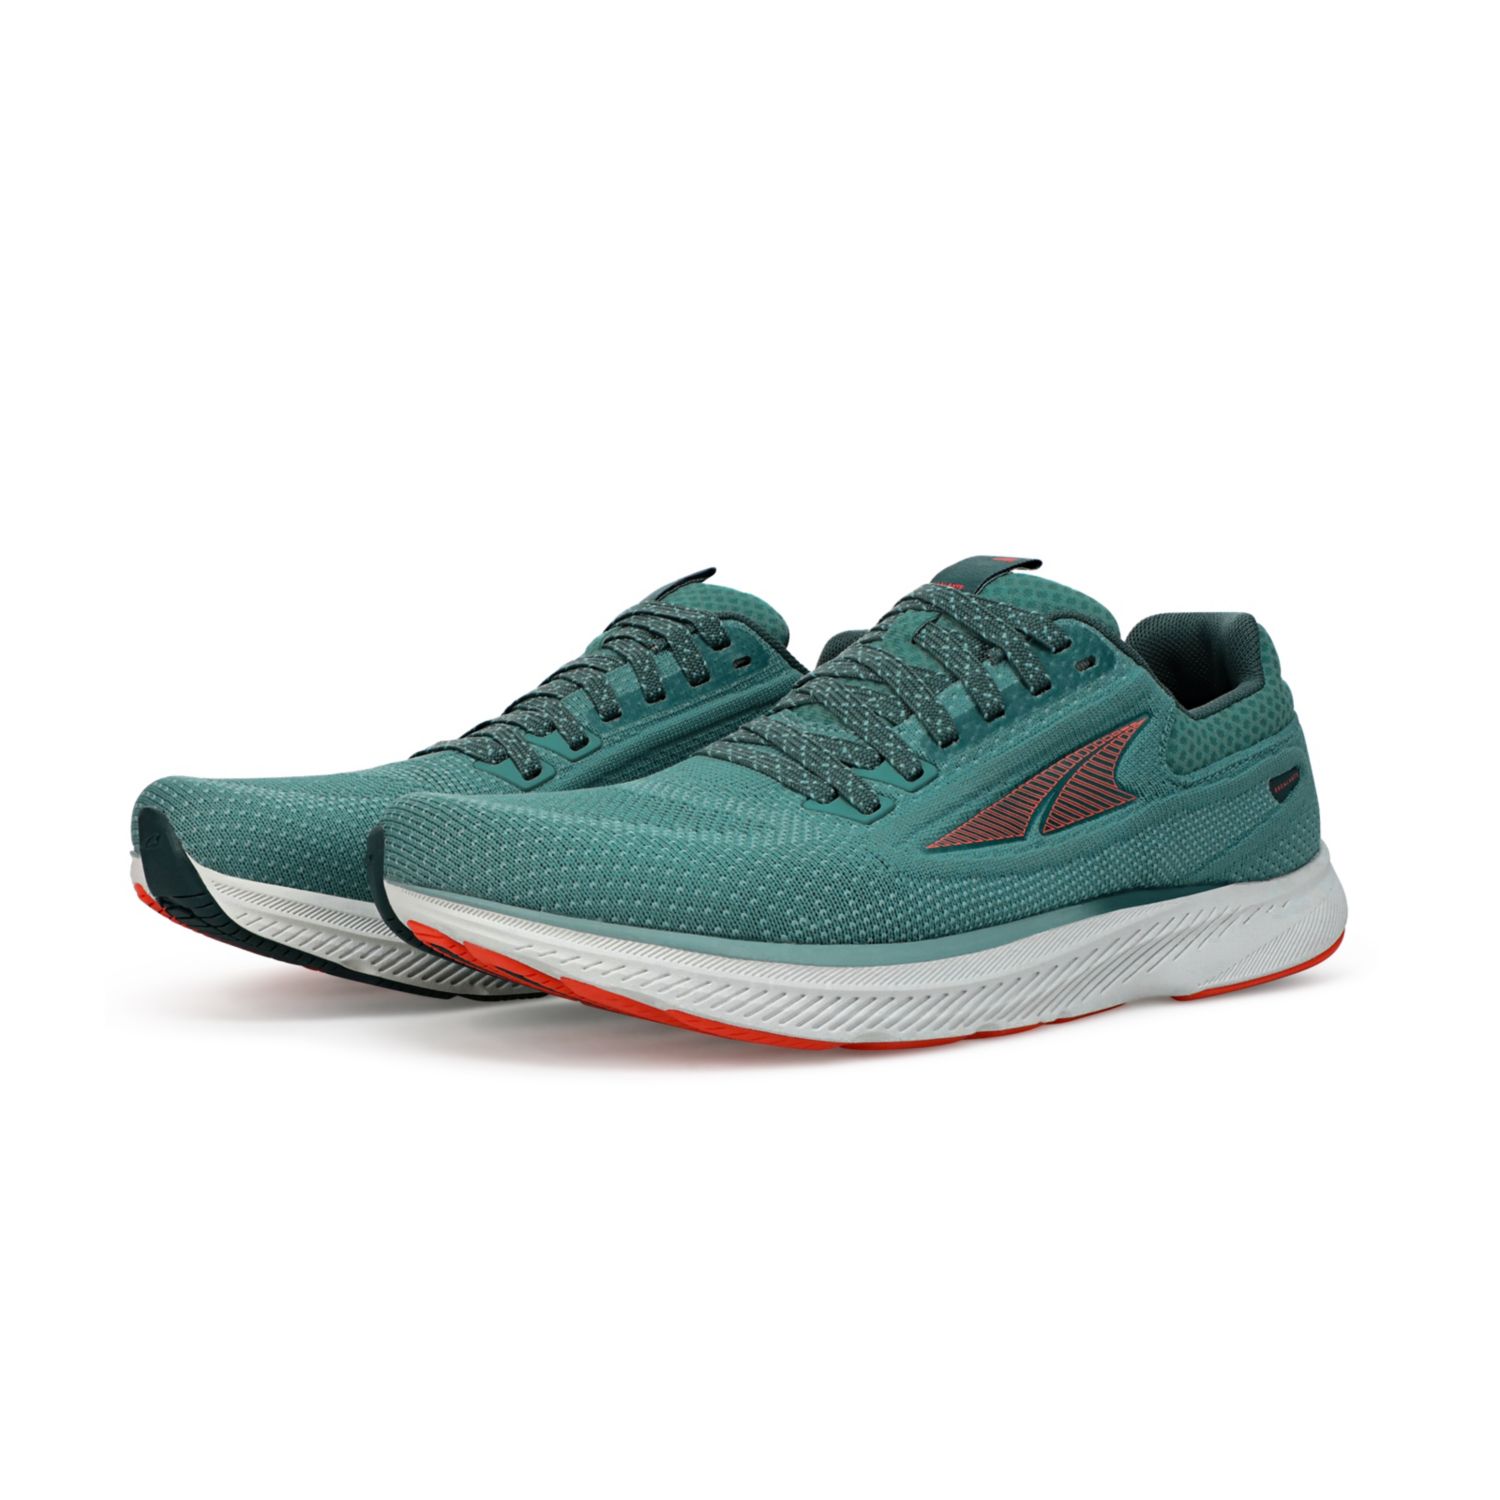 Turquoise Altra Escalante 3 Women's Walking Shoes | Ireland-85172409